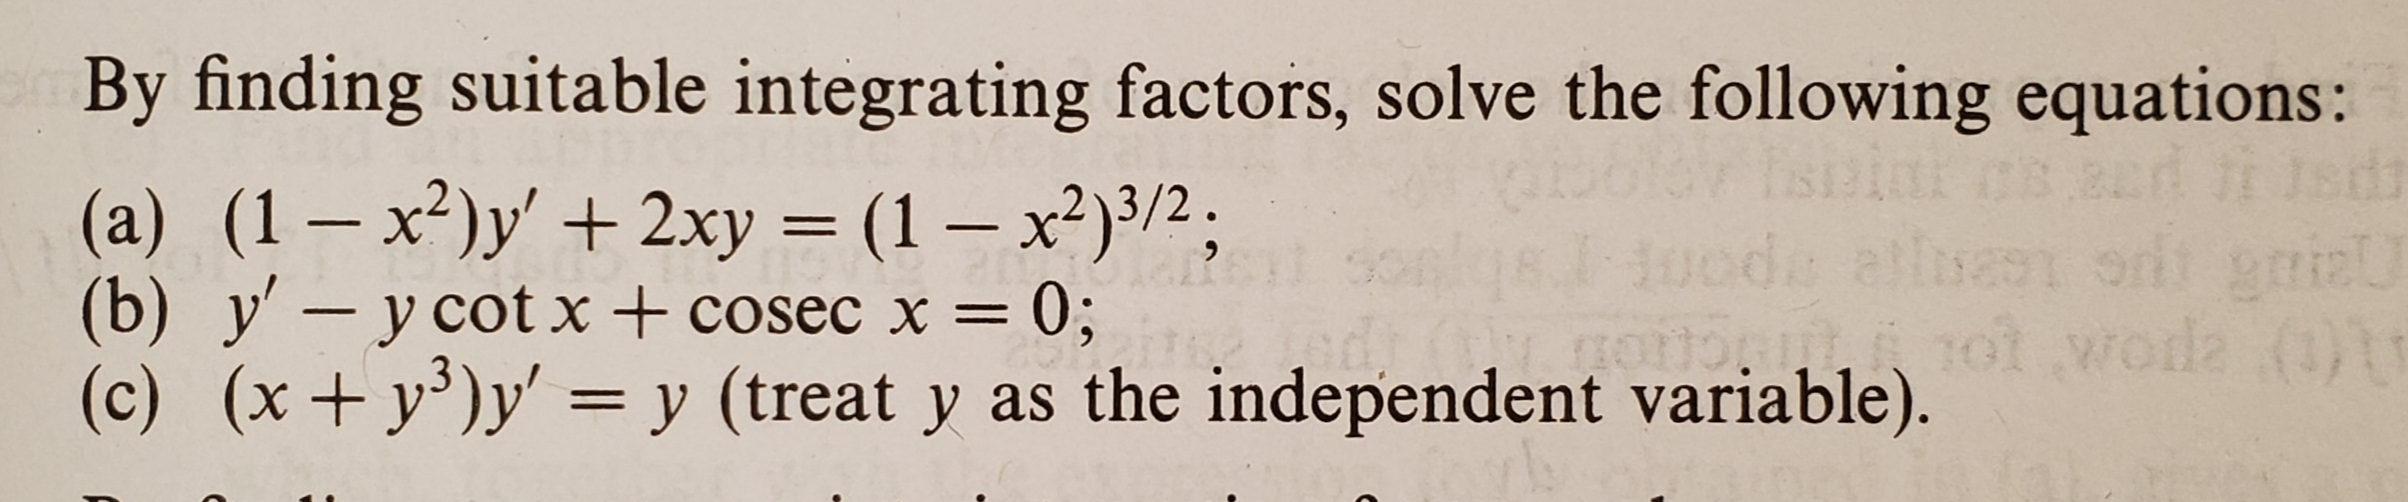 By finding suitable integrating factors, solve the following equations:
(a) (1-x?)y' + 2xy (1-x2)3/2.
(b) y'- y cot x +cosec x0;
(c) (x + y*)y, y (treat y as the independent variable)
